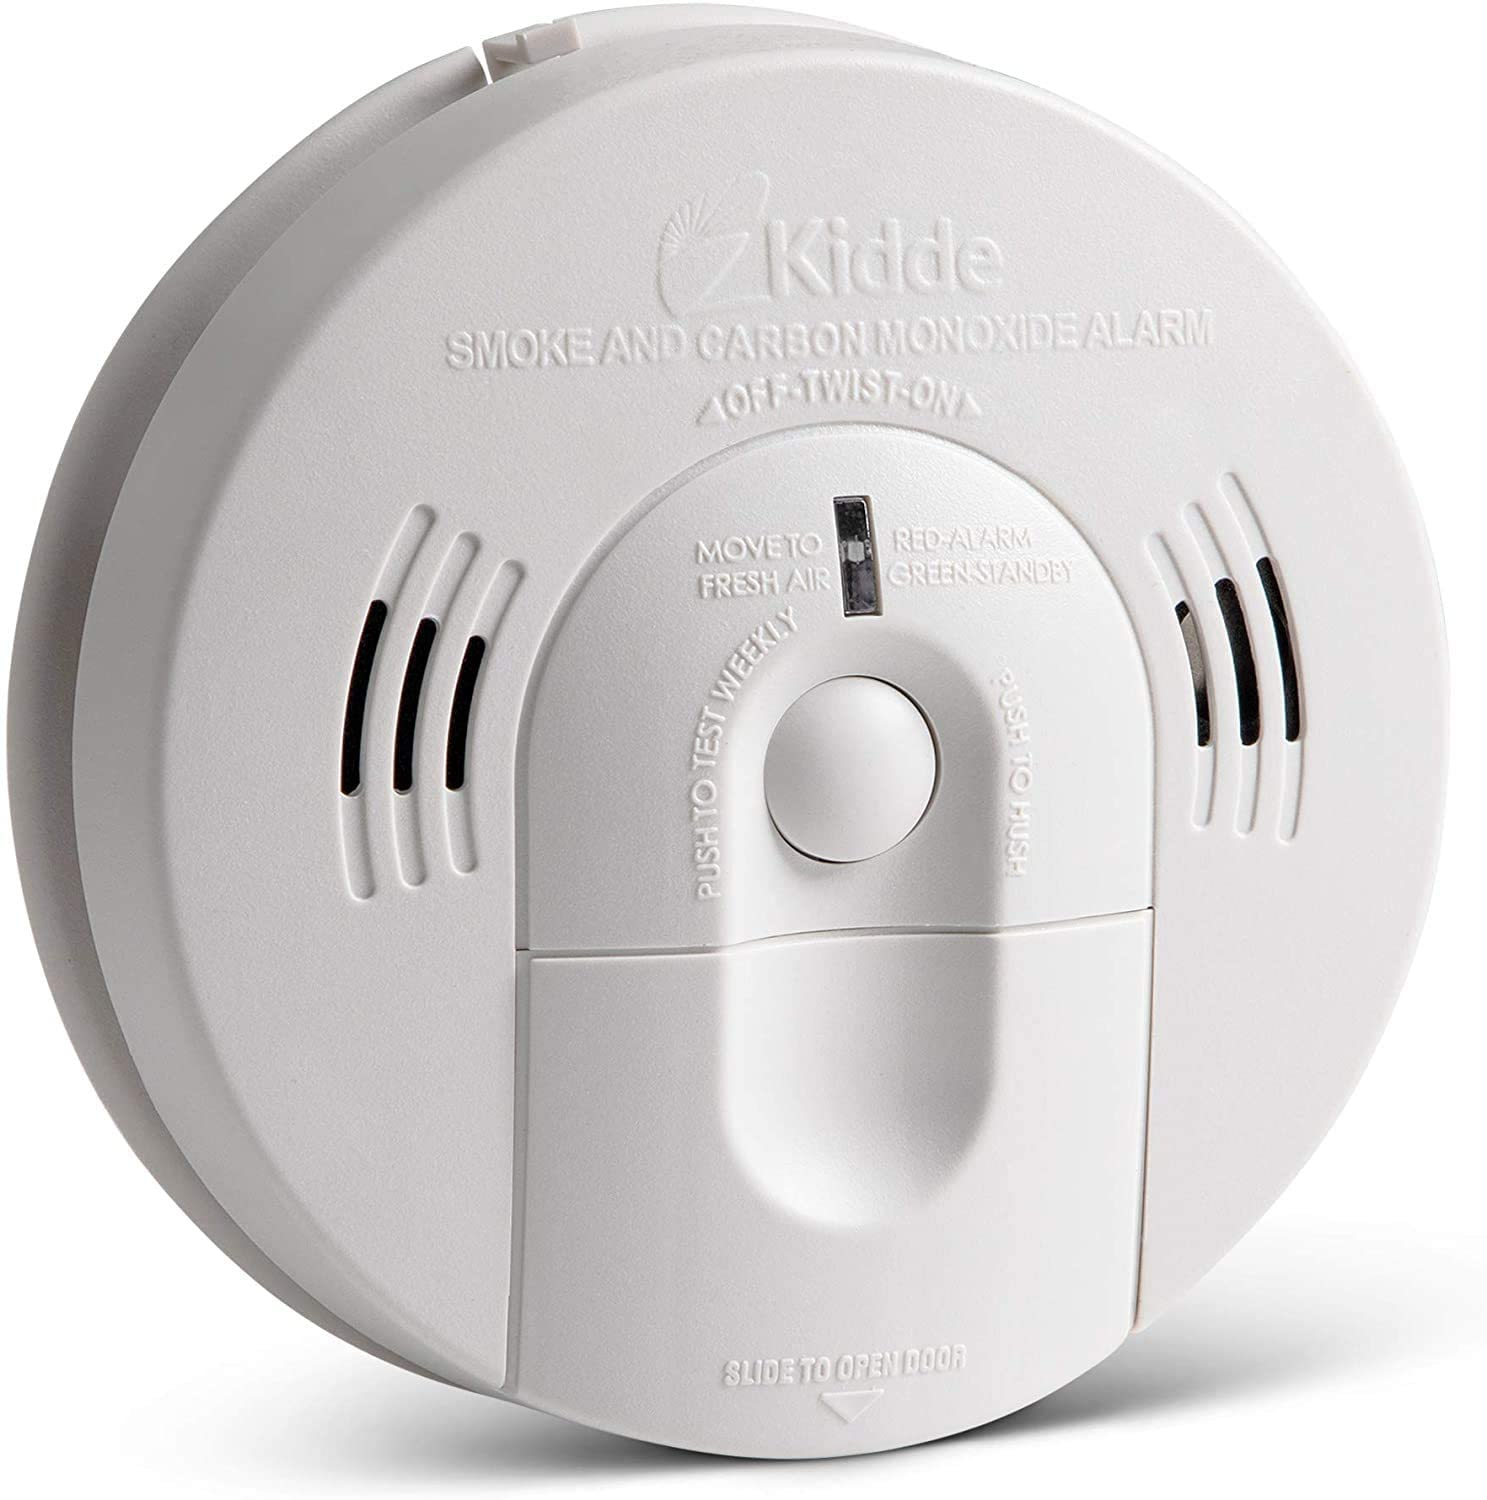 Kidde Smoke & Carbon Monoxide Detector.